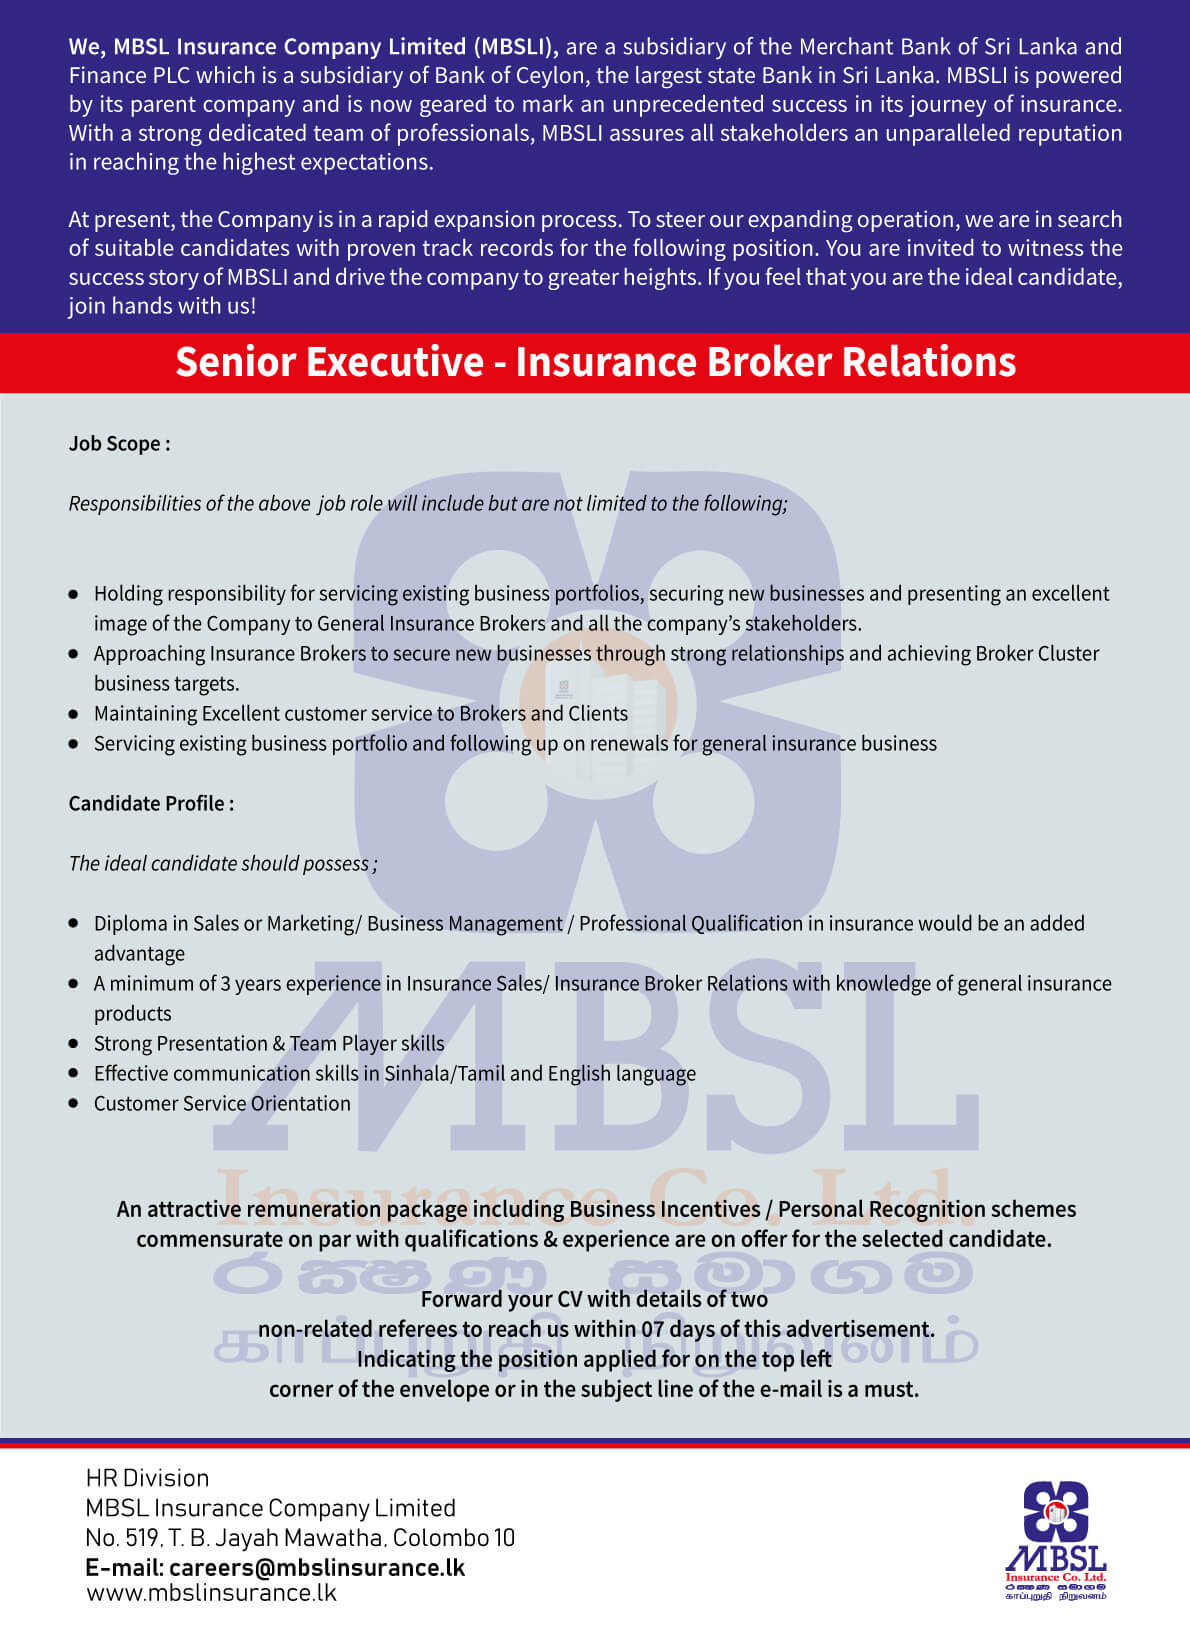 Senior Executive - Insurance Broker Relations